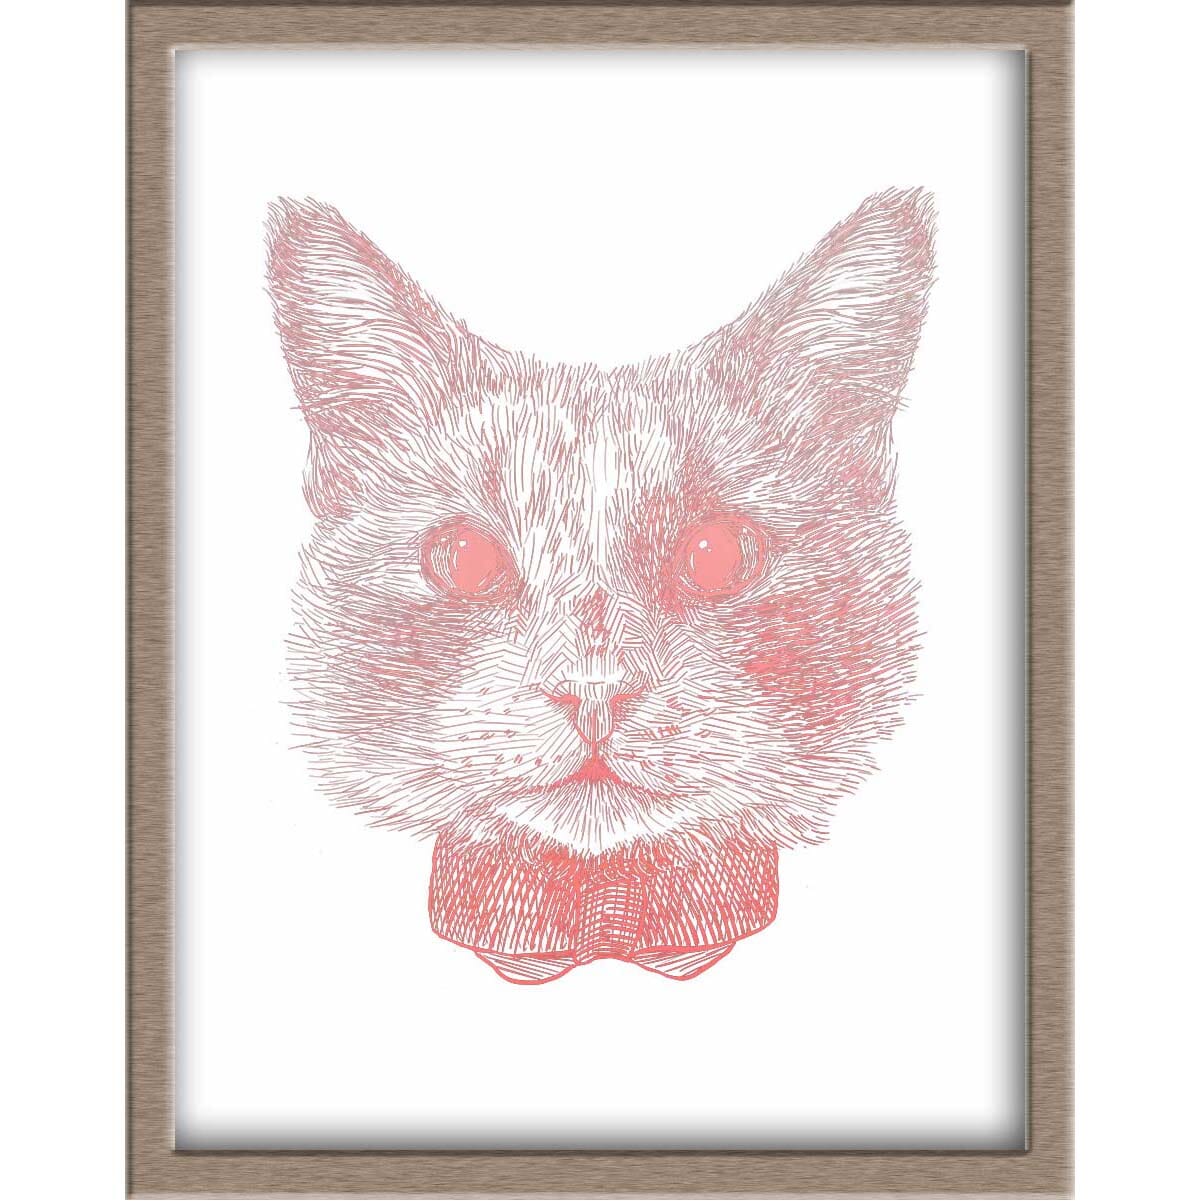 Sweet Cat Foiled Print (Bear) Posters, Prints, & Visual Artwork JoyousJoyfulJoyness 